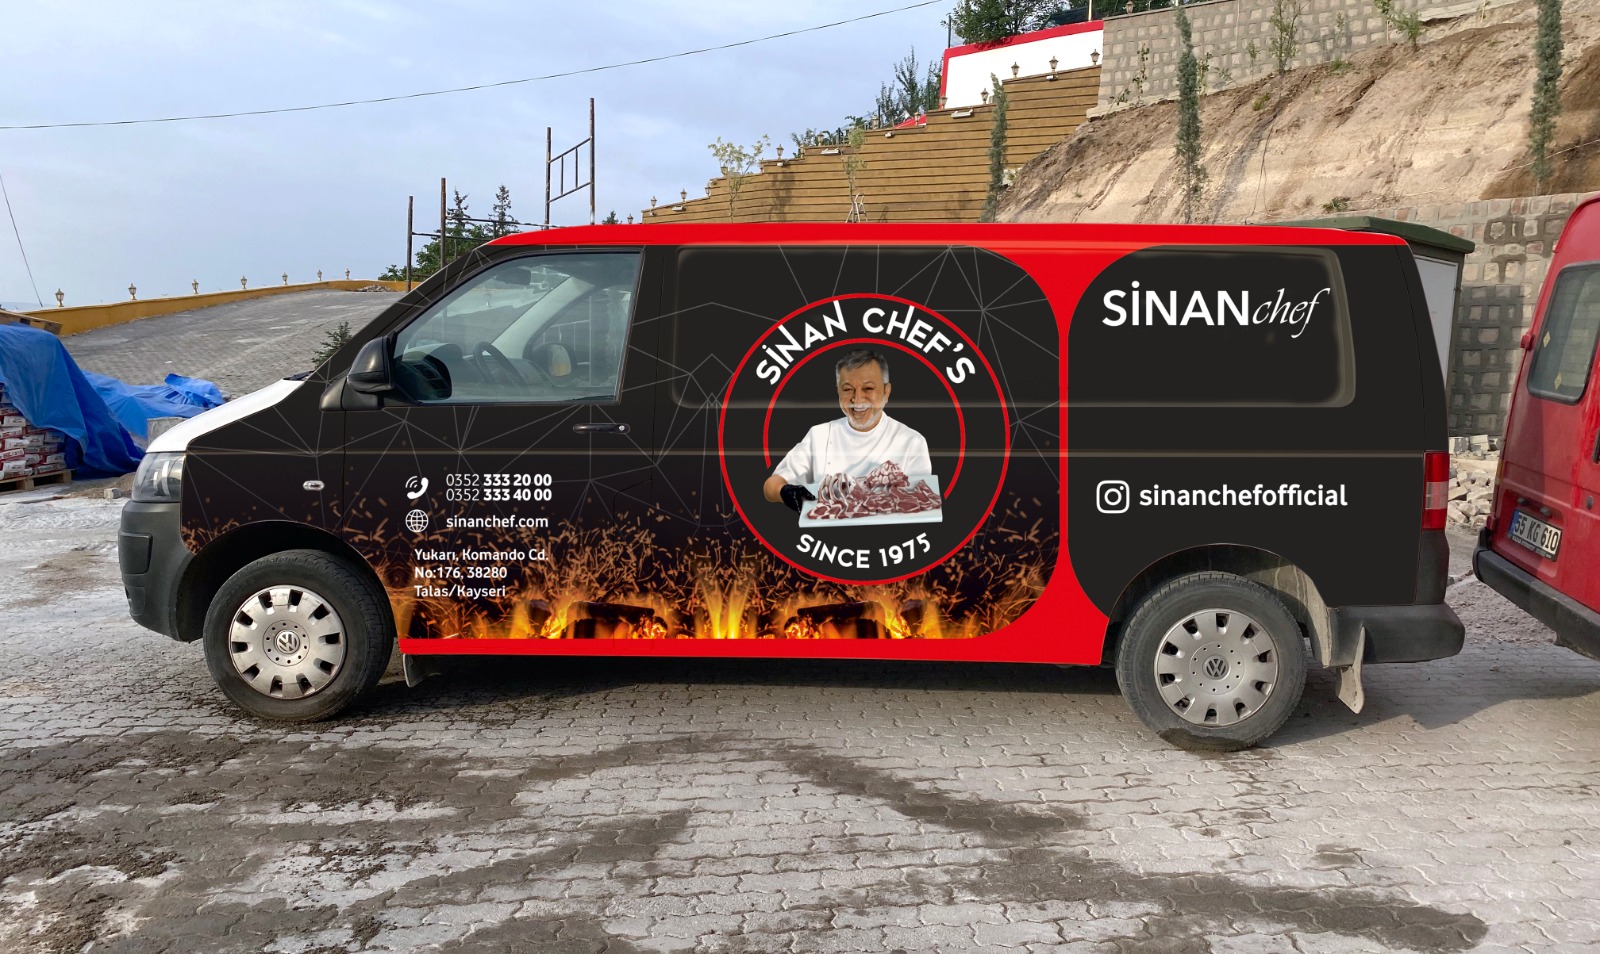 Sinan Chef's